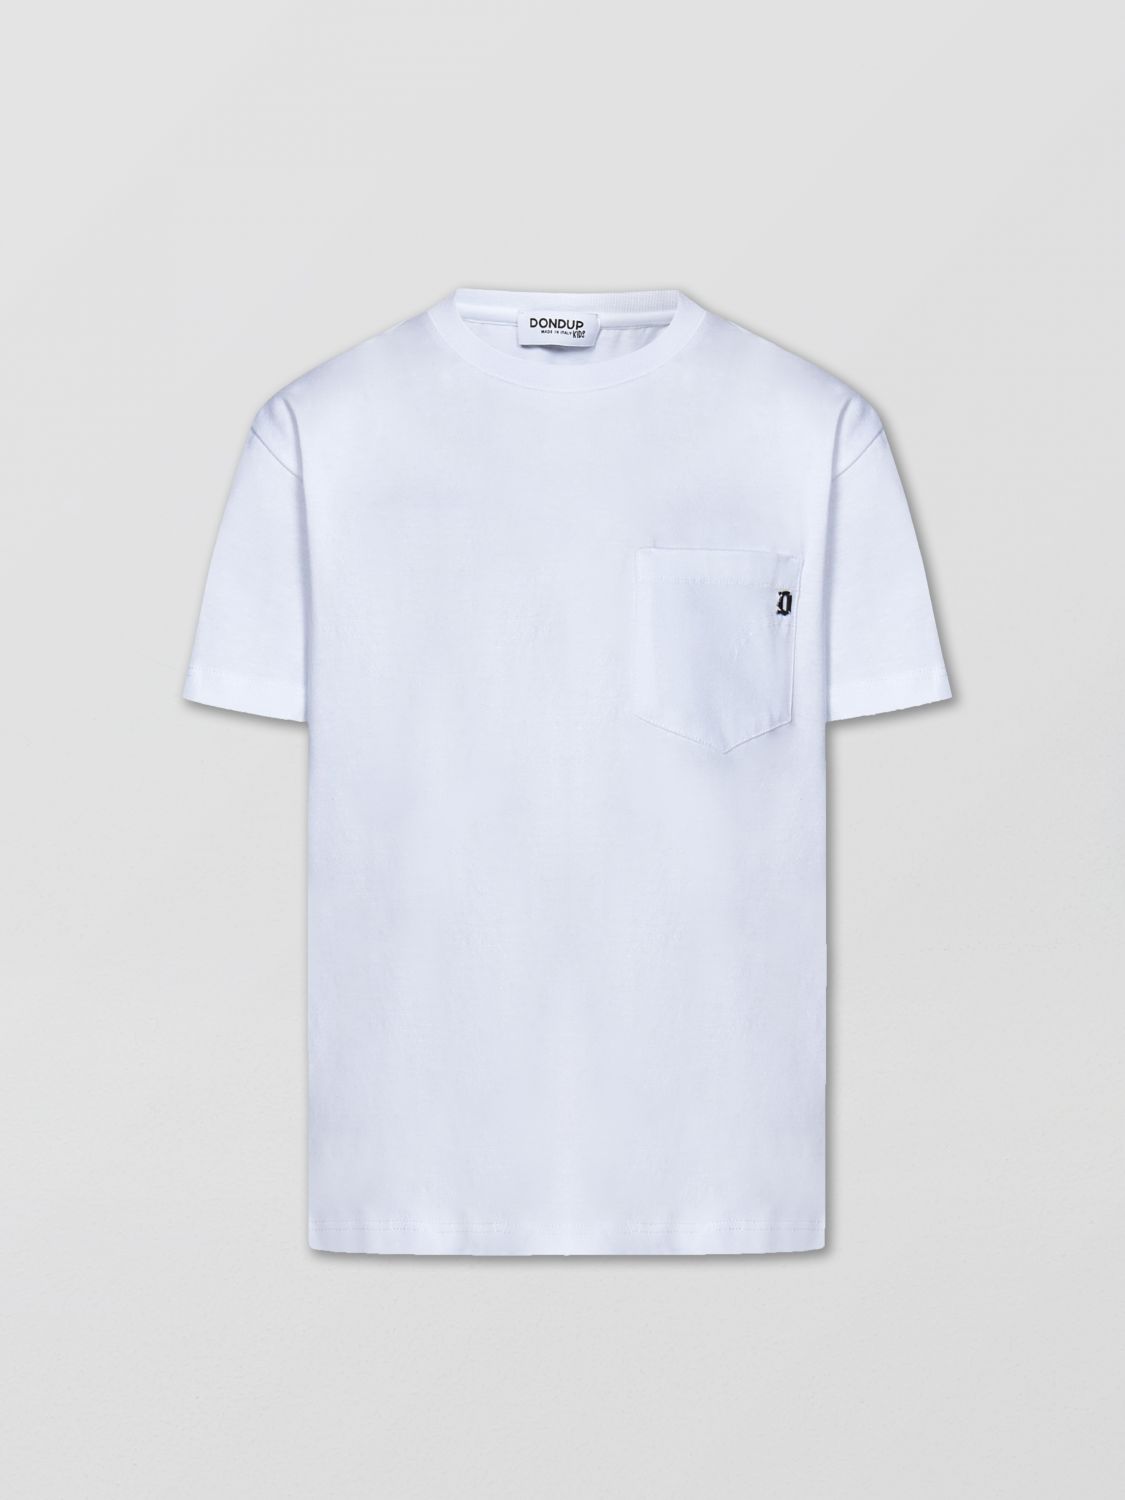 Dondup T-Shirt DONDUP Kids colour White 1